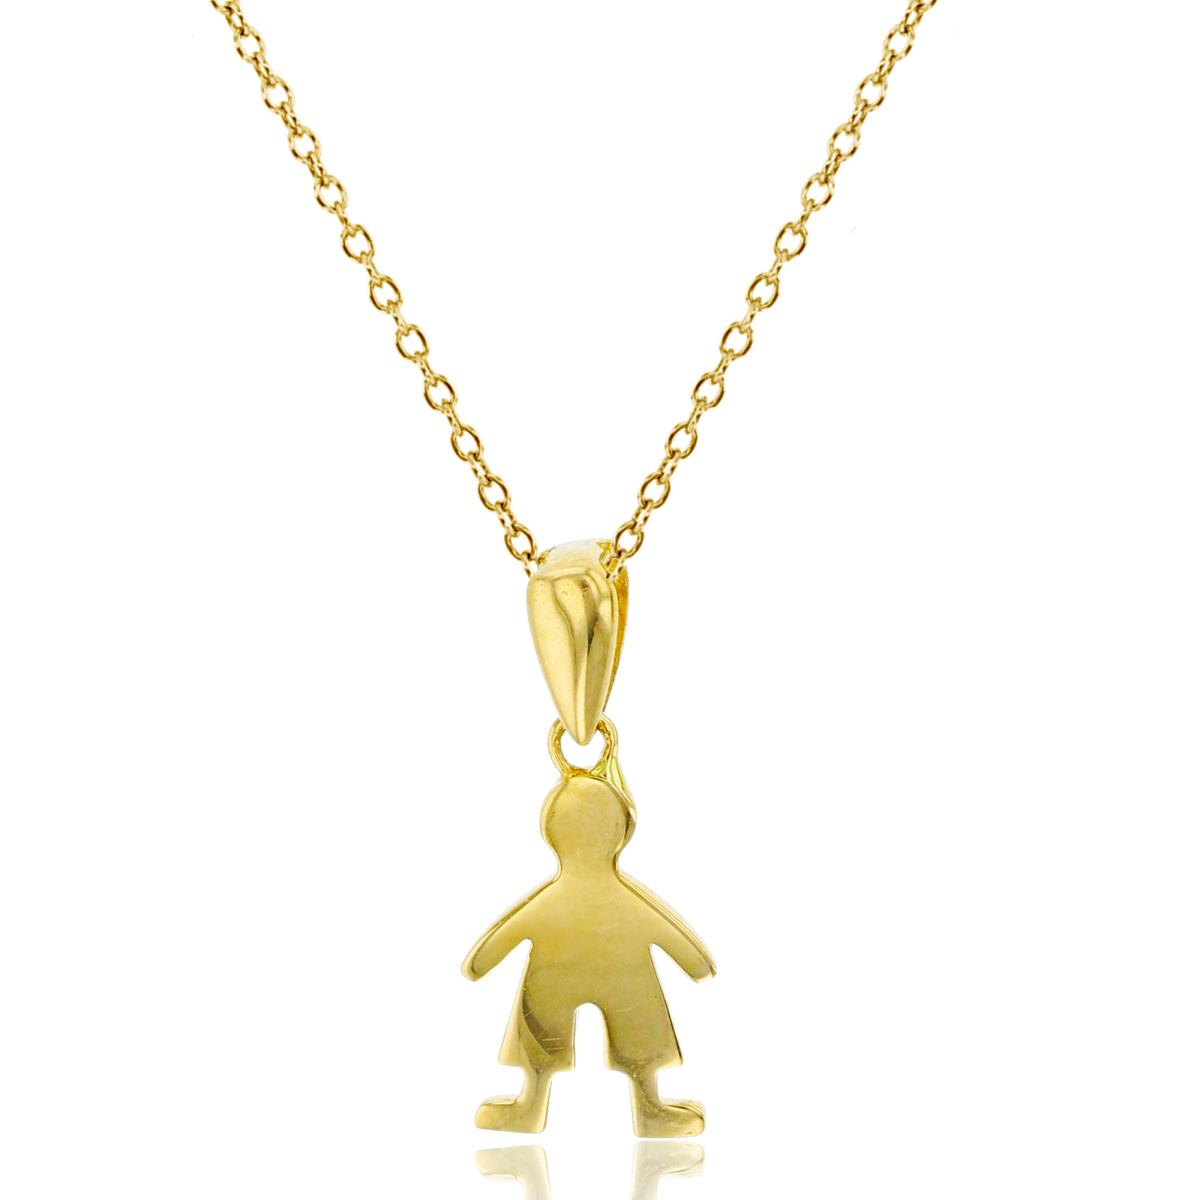 10K Yellow Gold High Polished Boy Shape 18" Necklace